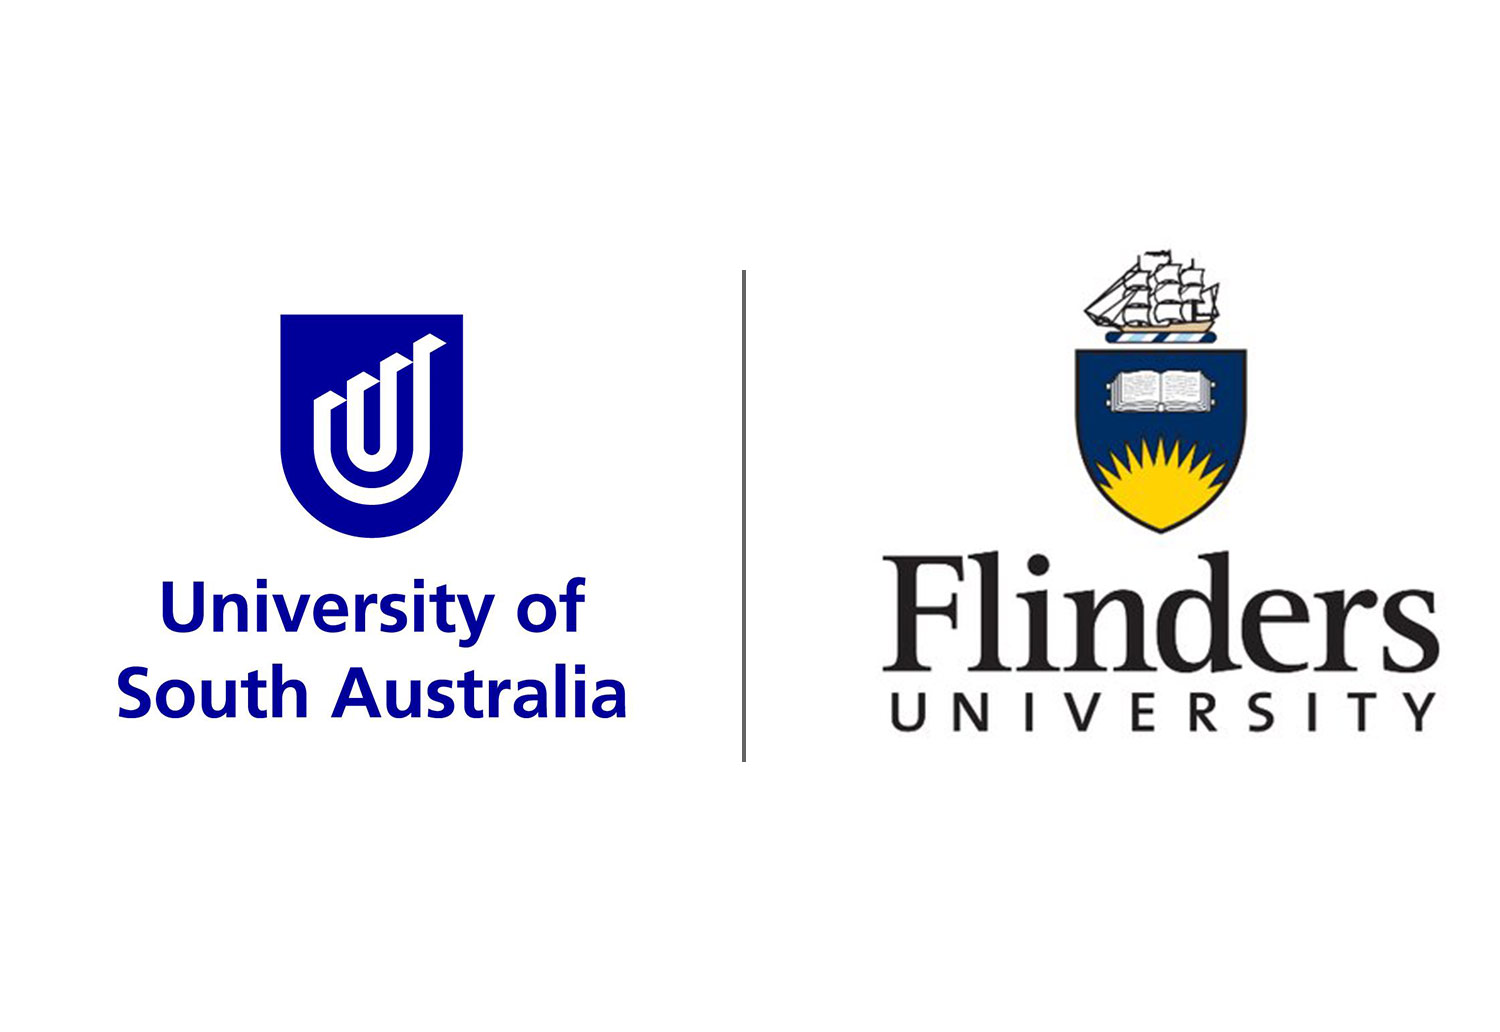 Image of University logos for UniSA and Flinders University